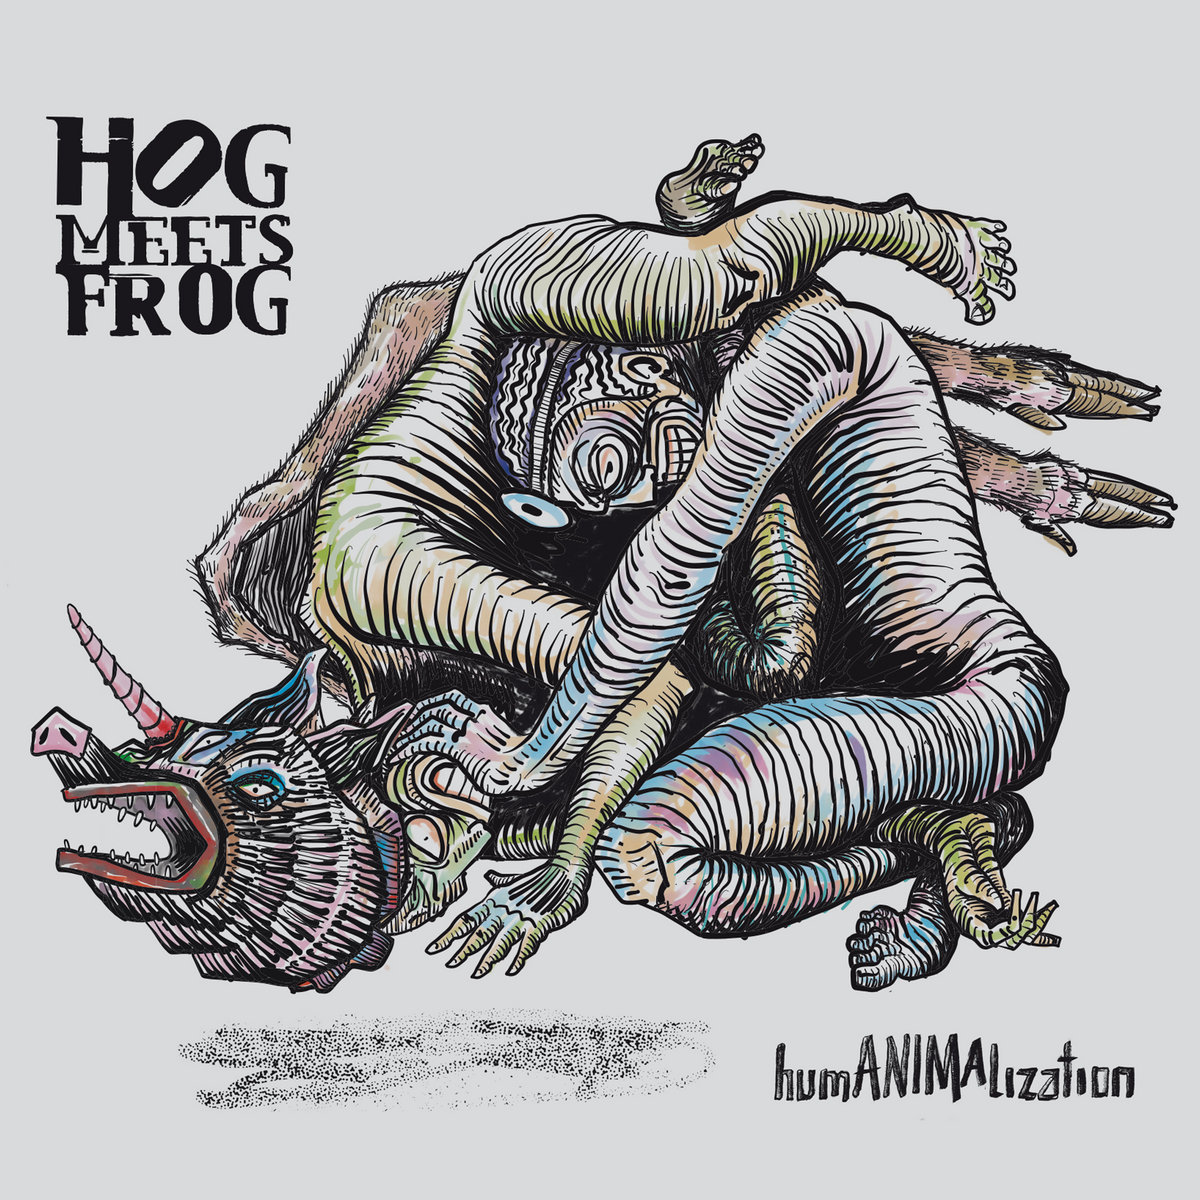 Hog Meets Frog - "Humanimalization" - 2023